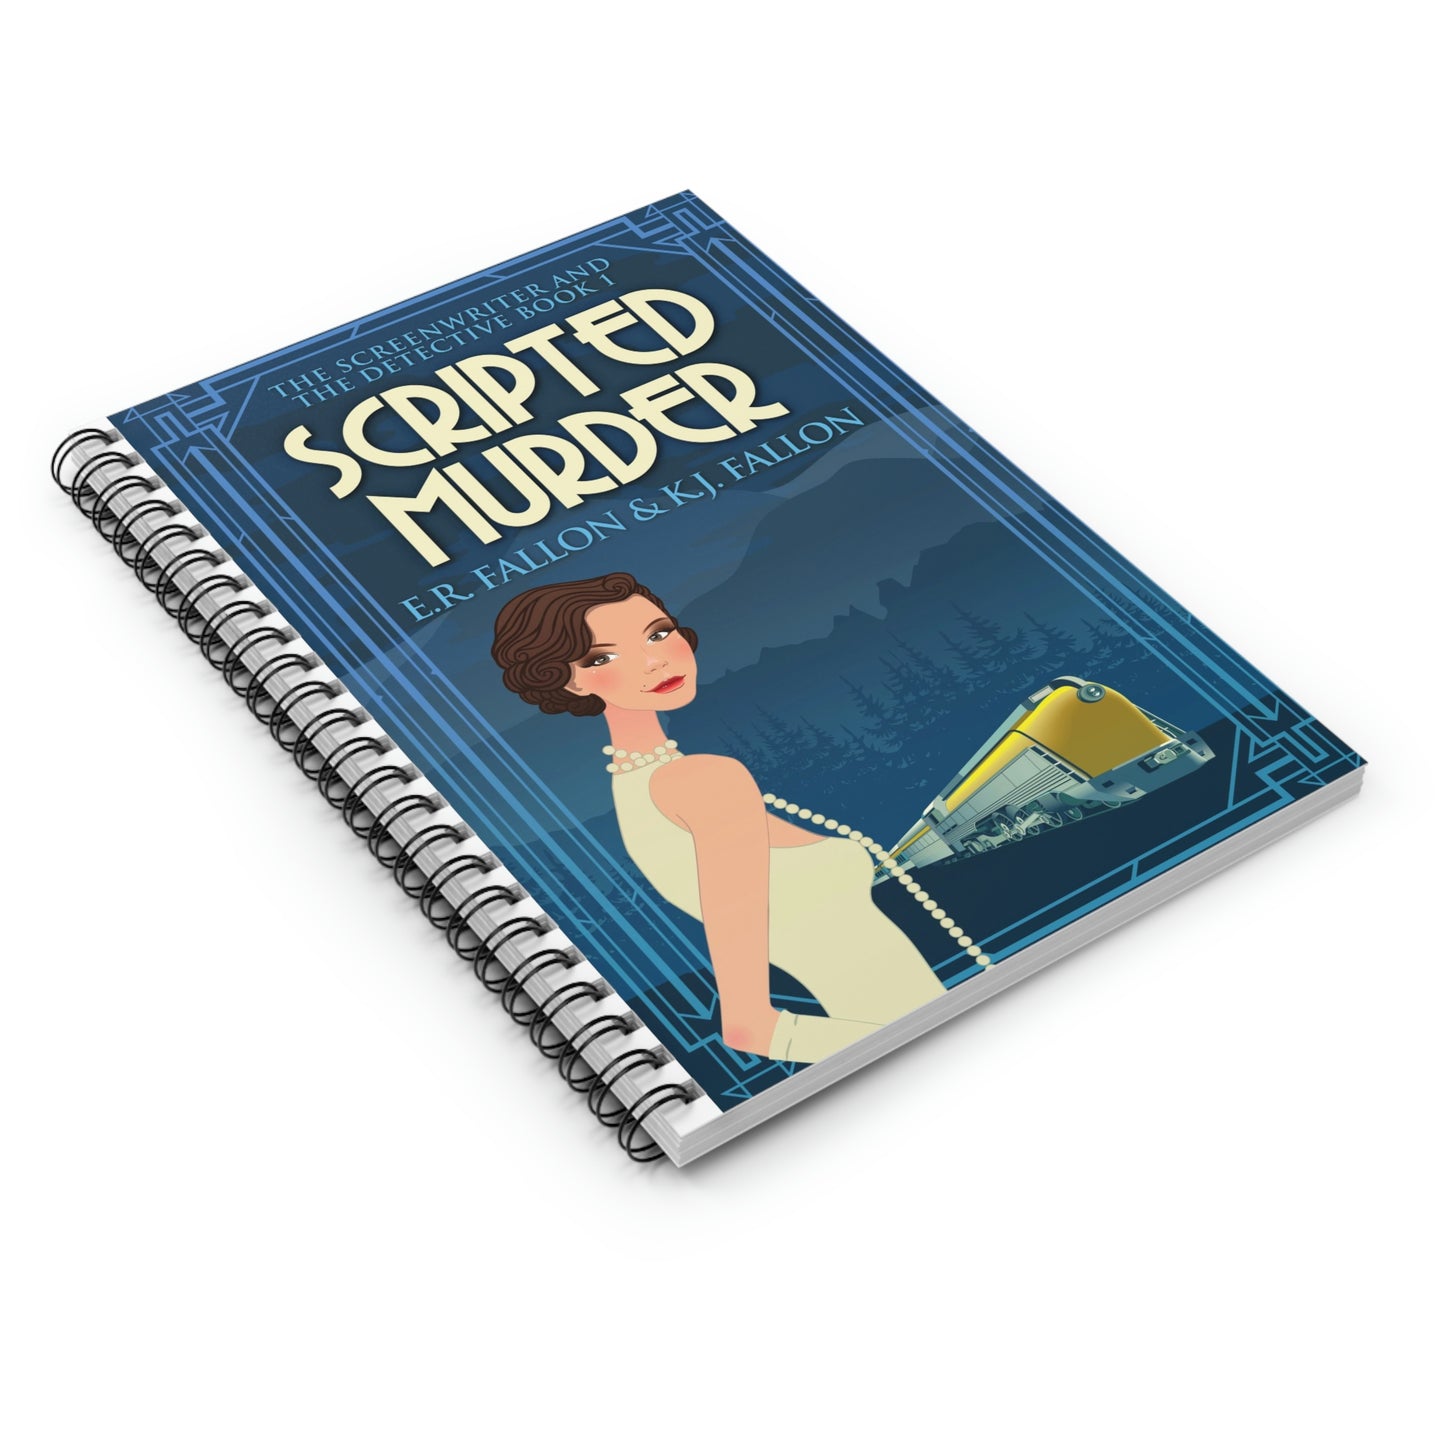 Scripted Murder - Spiral Notebook